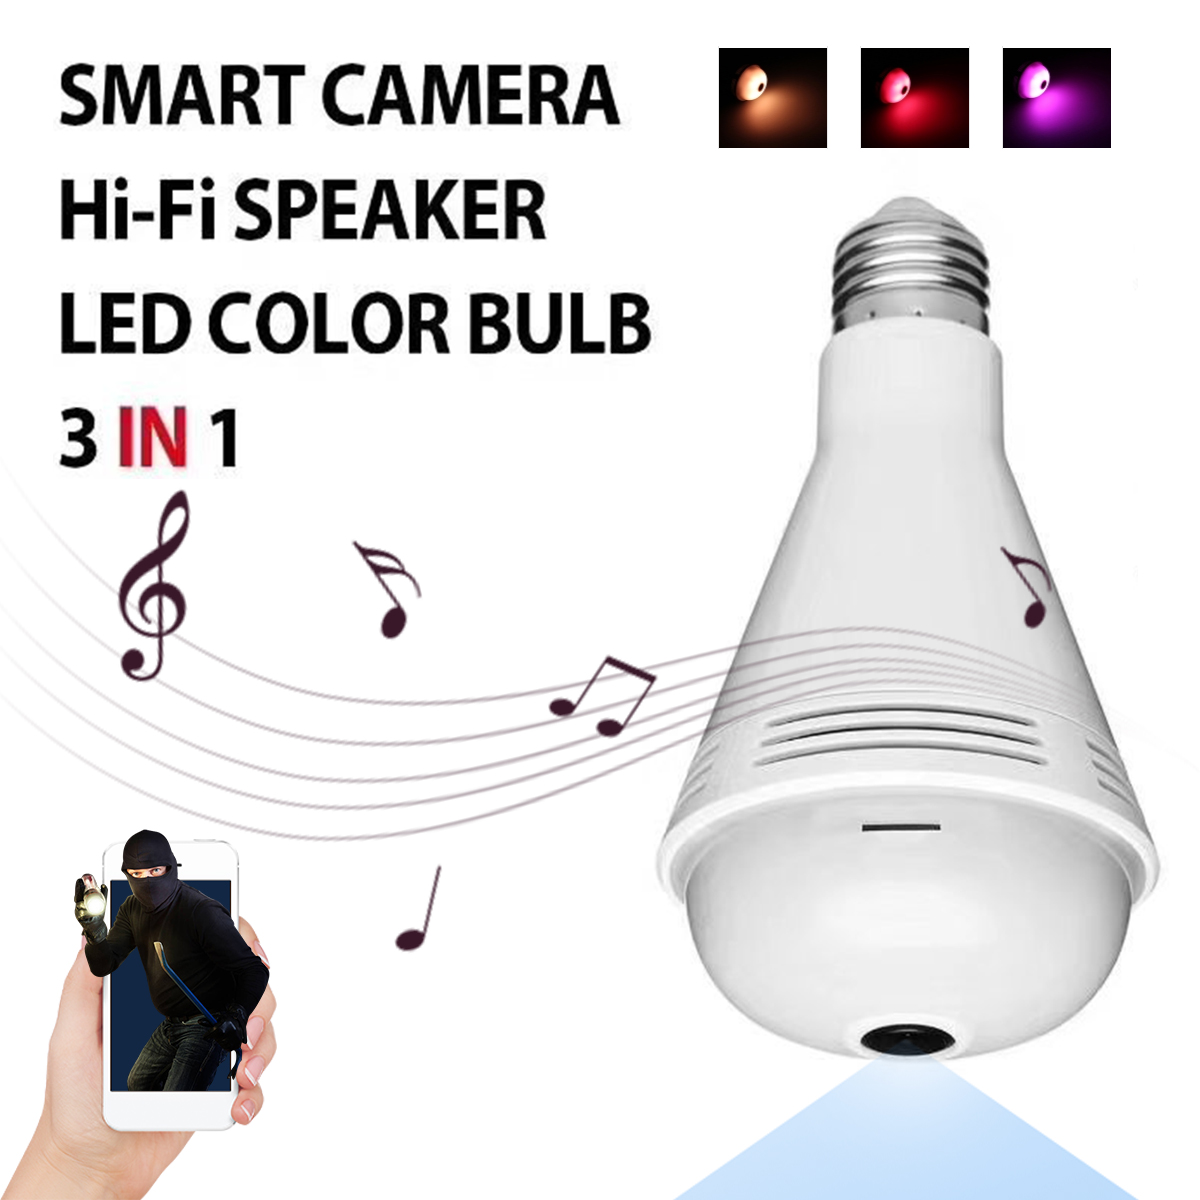 360° HD 960P 1080P WiFi IP Camera LED Light Bulb Bluetooth Speaker Security Monitoring 31